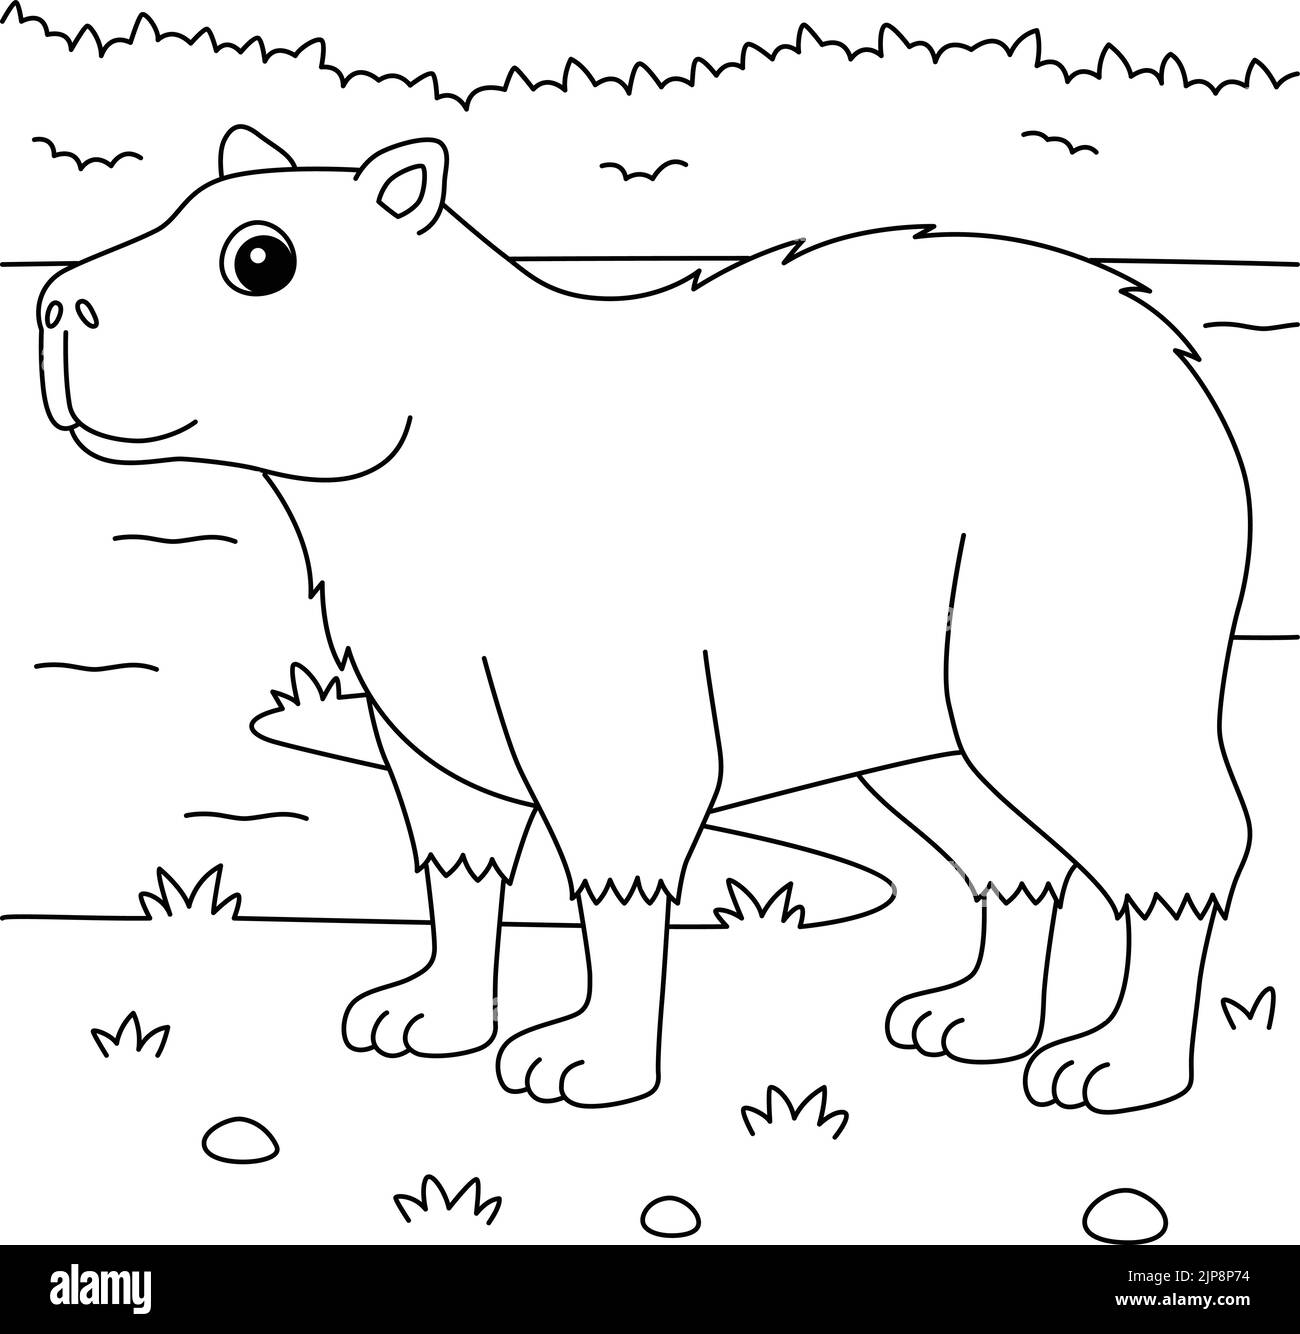 desenho de sucuri para colorir - Pesquisa Google  Capybara, Realistic  animal drawings, Animal photography dogs